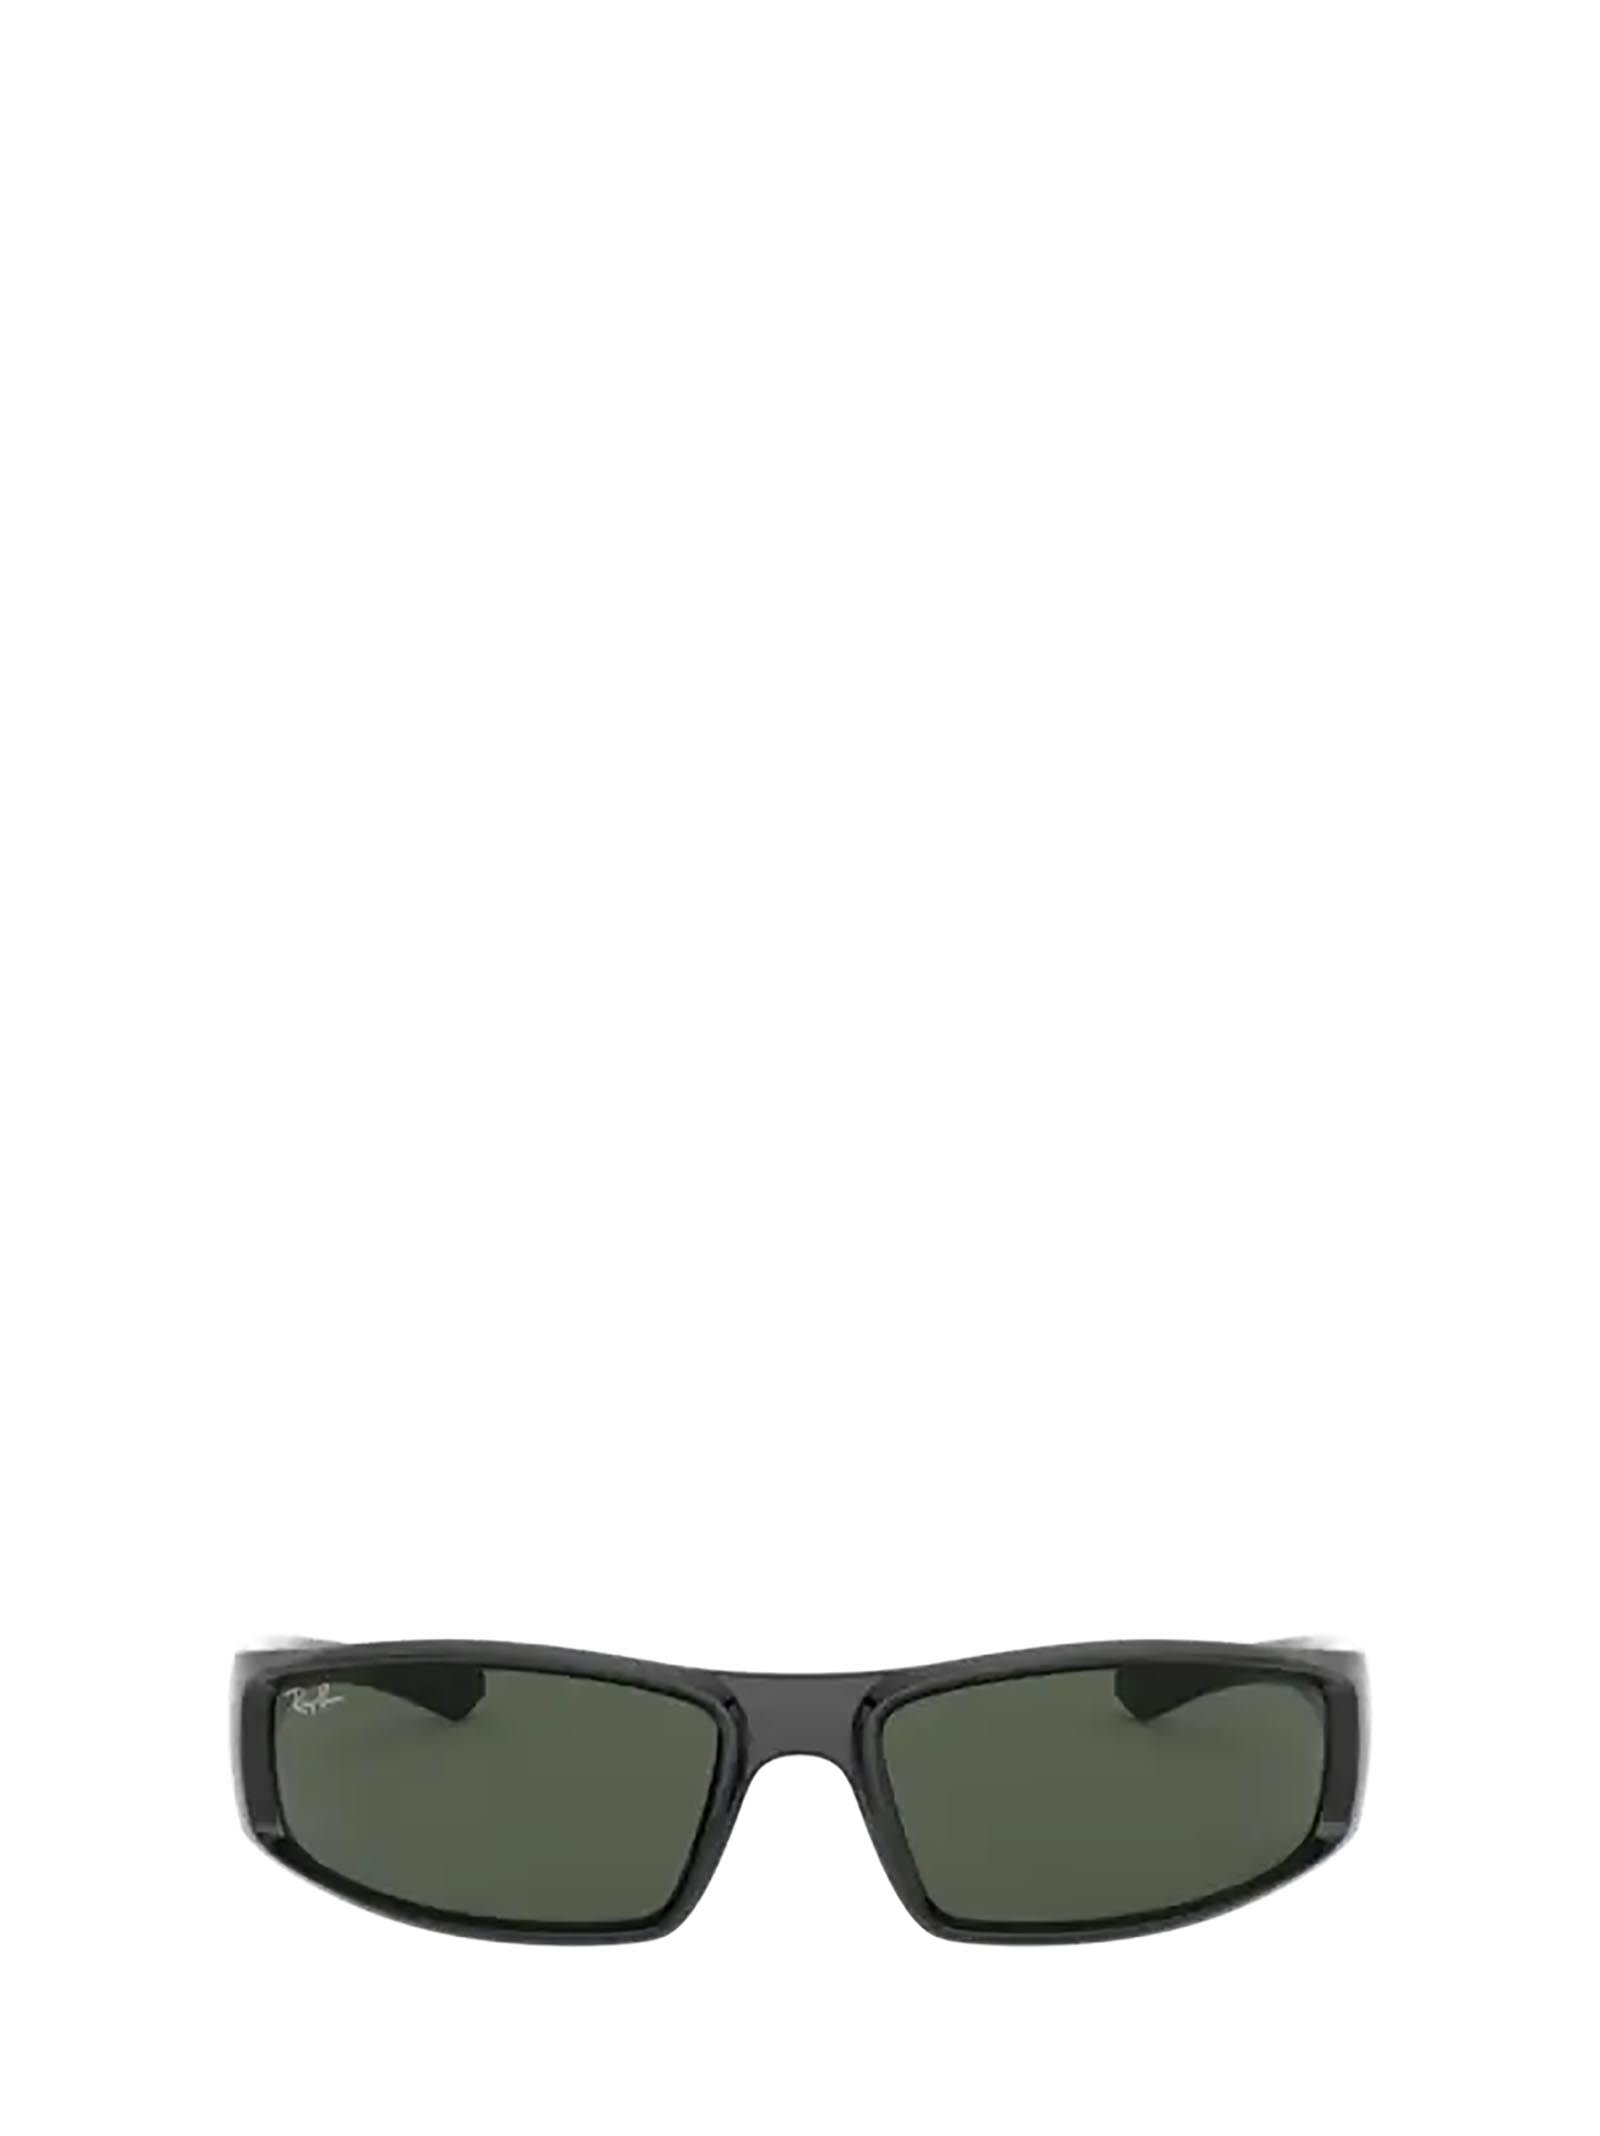 Ray-Ban Ray-ban Rb4335 Black Sunglasses